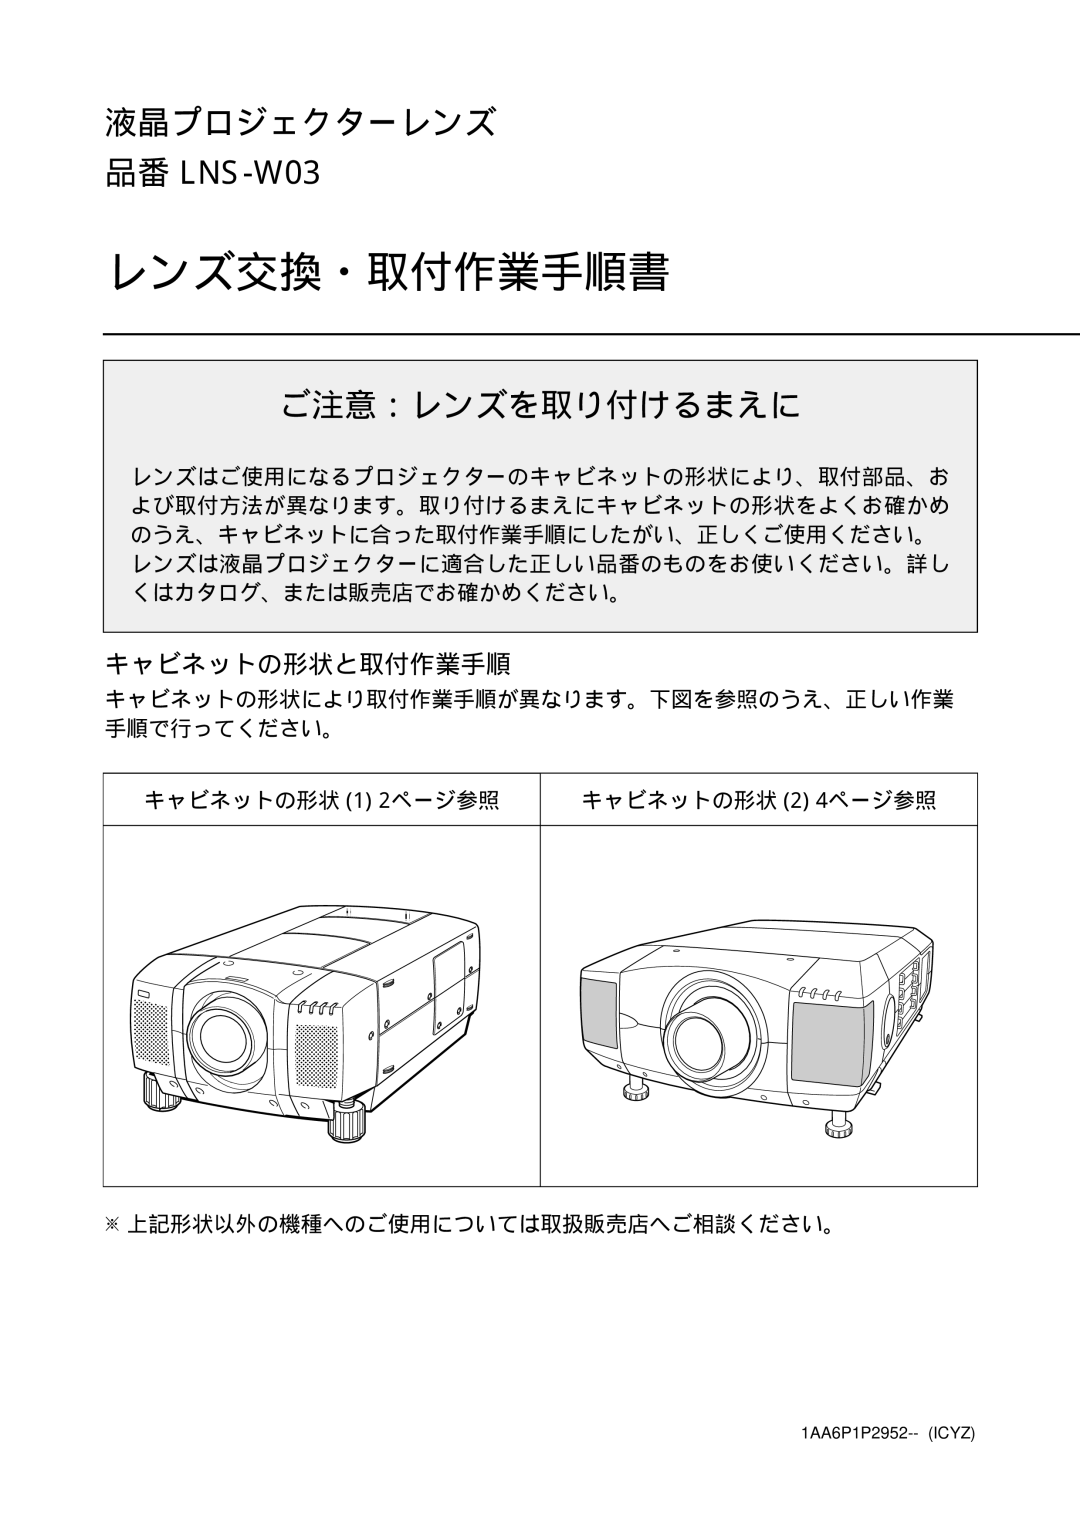 Fisher manual ご注意：レンズを取り付けるまえに, レンズ交換・取付作業手順書, 液晶プロジェクターレンズ, 品番 LNS-W03, キャビネットの形状と取付作業手順 